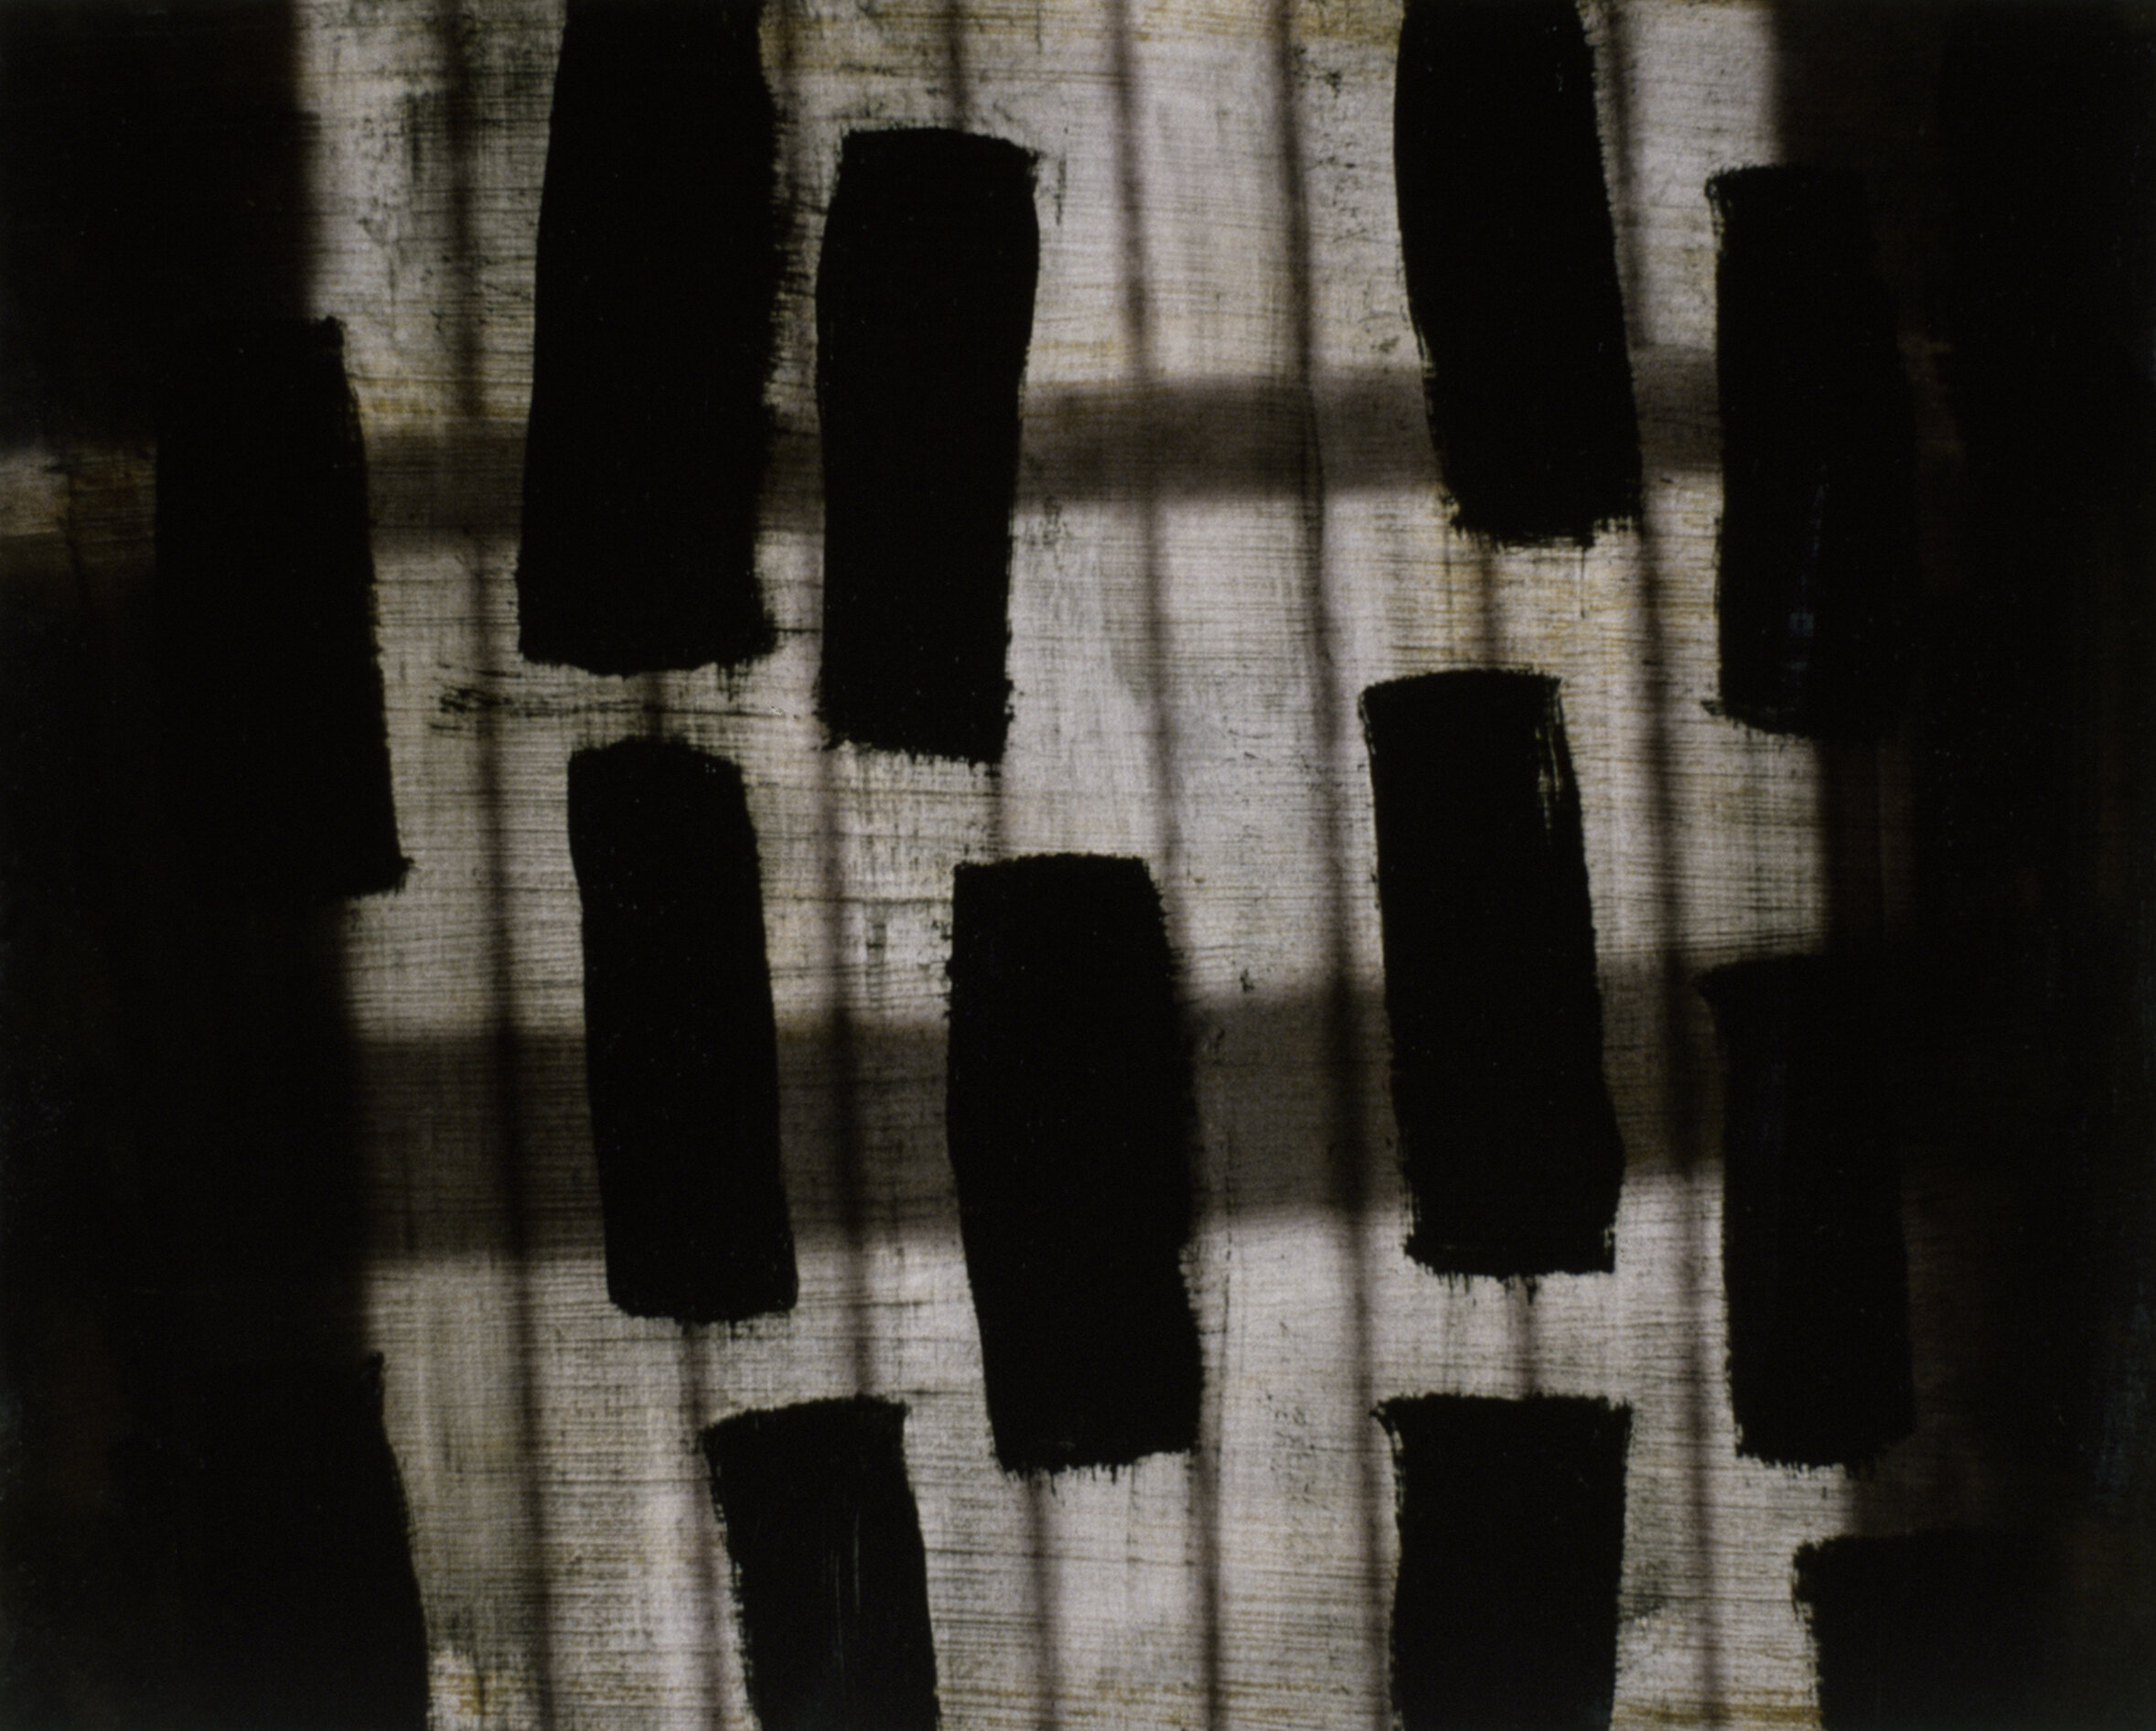   Untitled 18.P6       2002  Digital Image , Oil, Paper on Panel      8” x 10”   